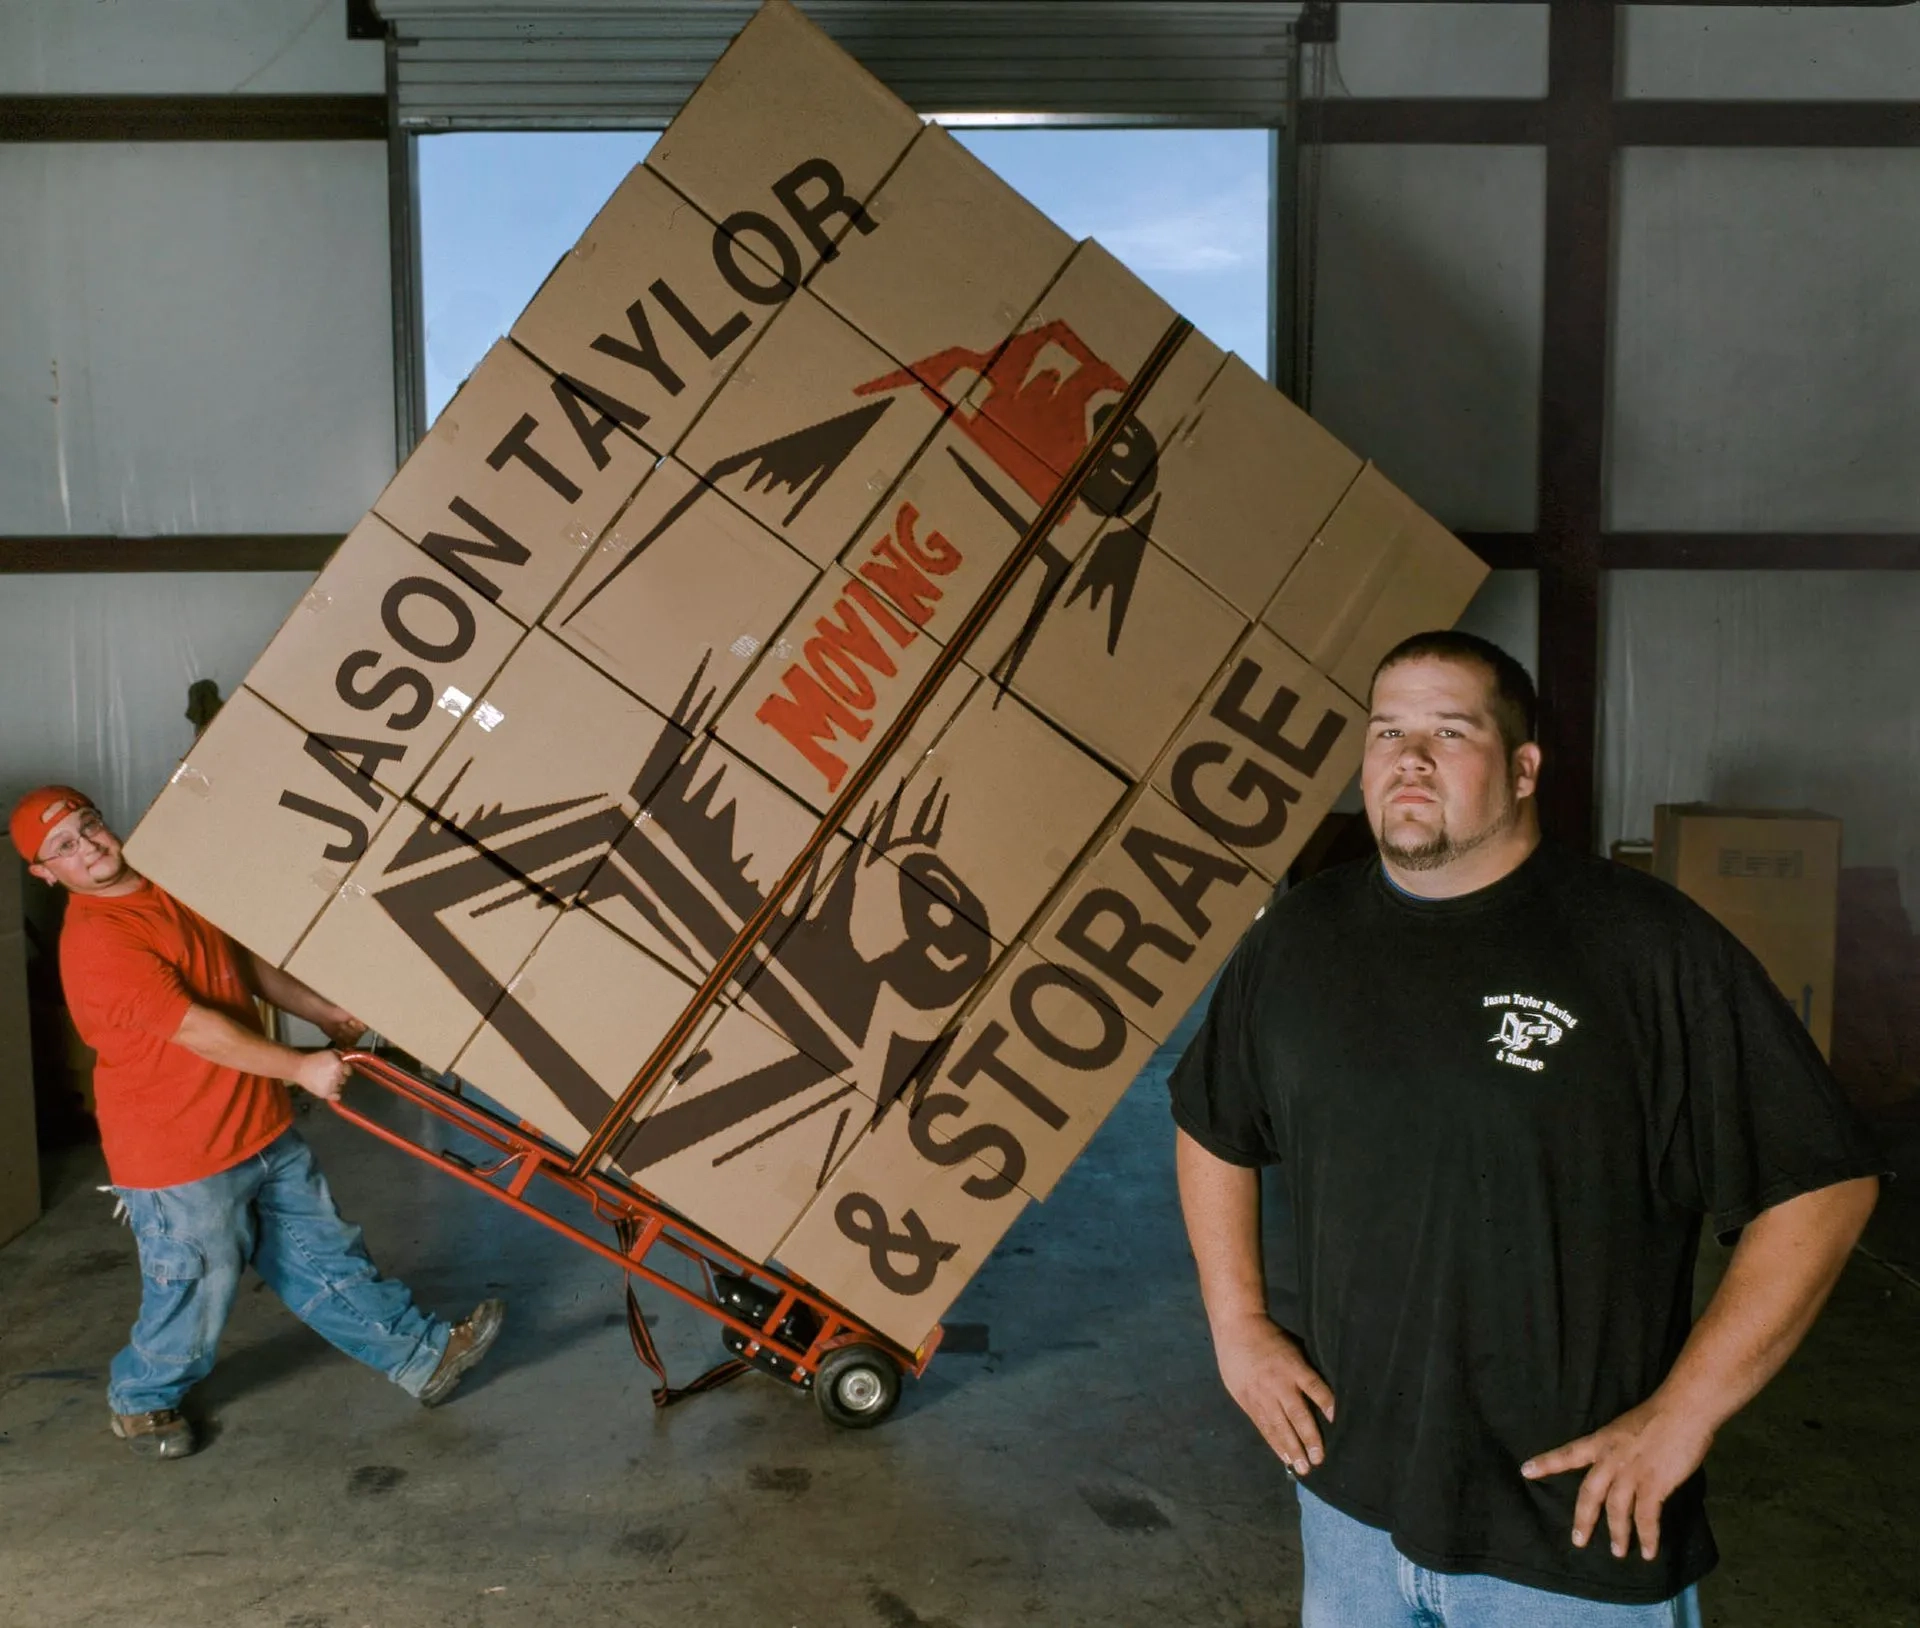 Jason Taylor Moving & Storage Logo